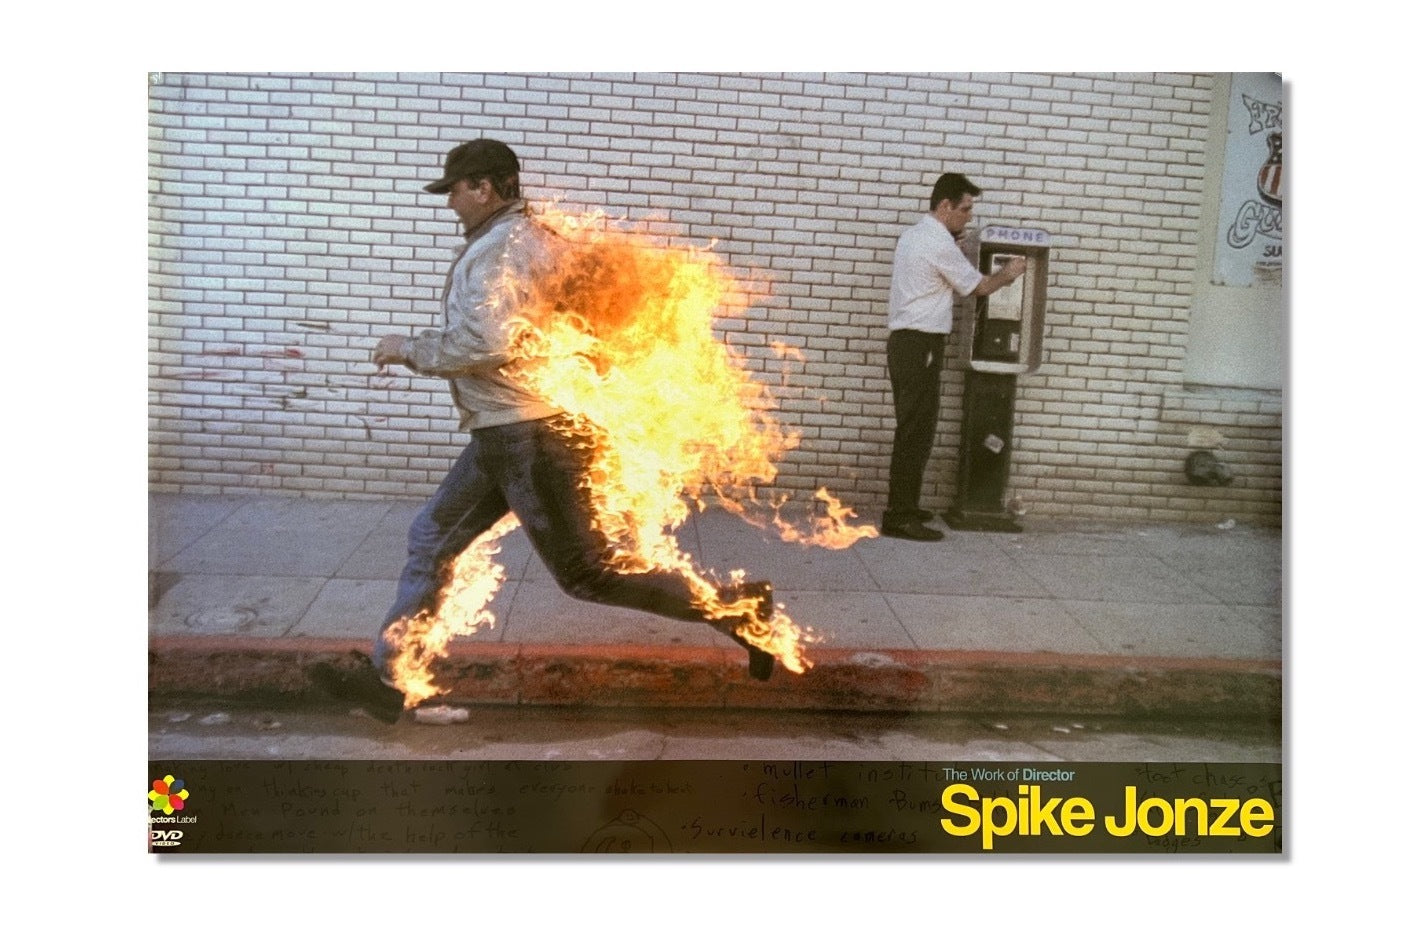 Spike Jonze, The Work of Director Spike Jonze, 2004